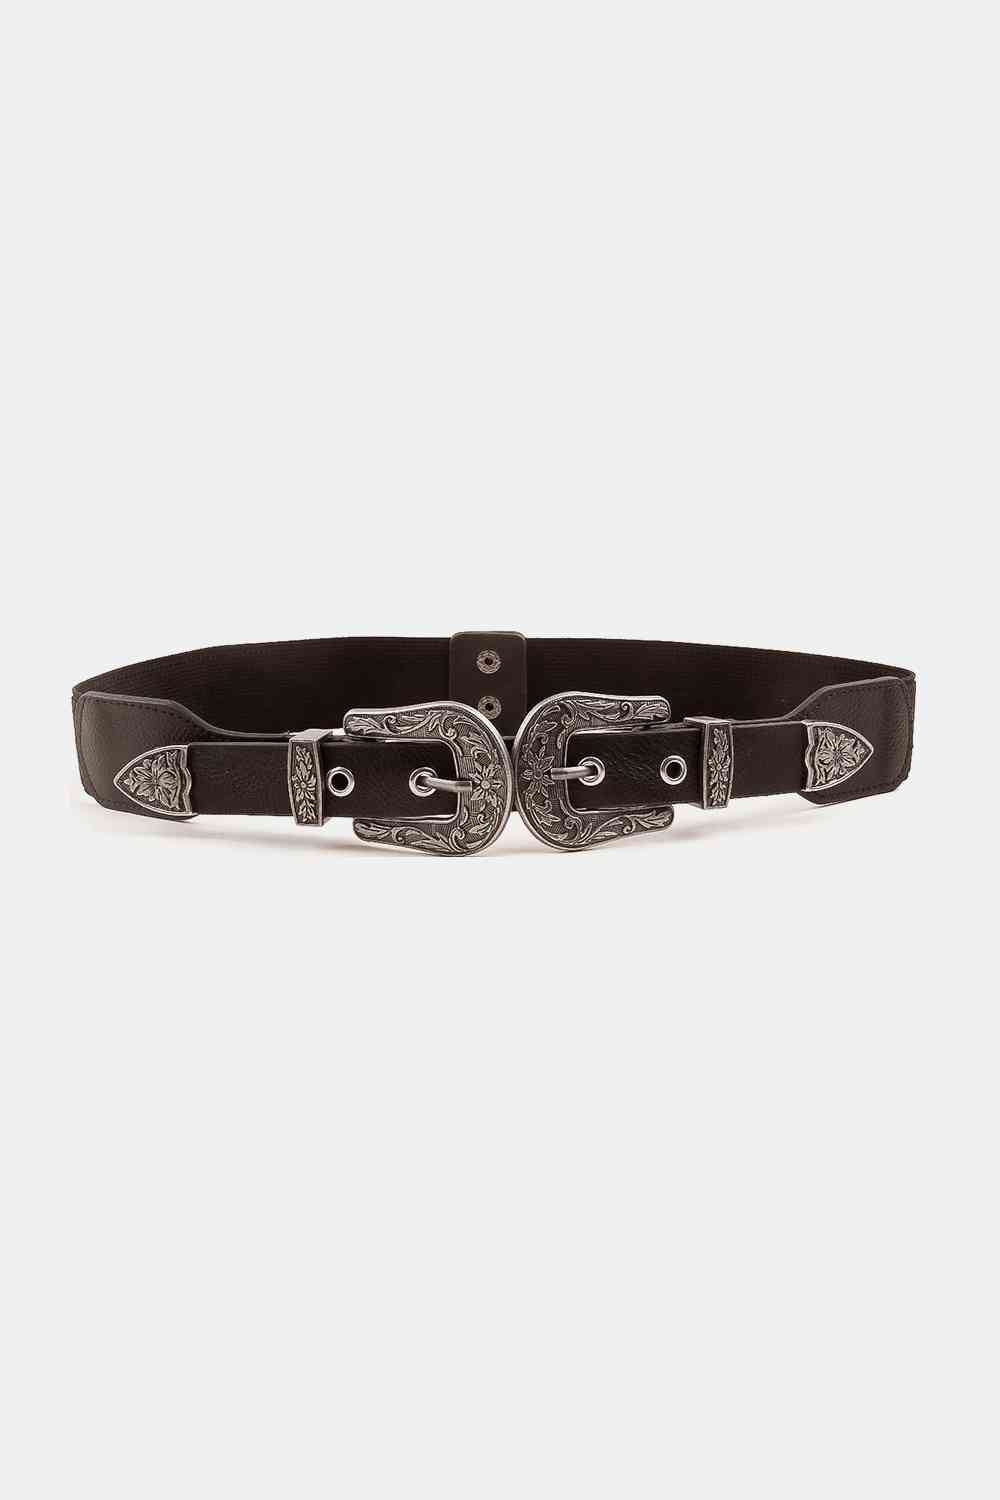 Symmetrical Zinc Alloy Buckle PU Leather Belt Black One Size